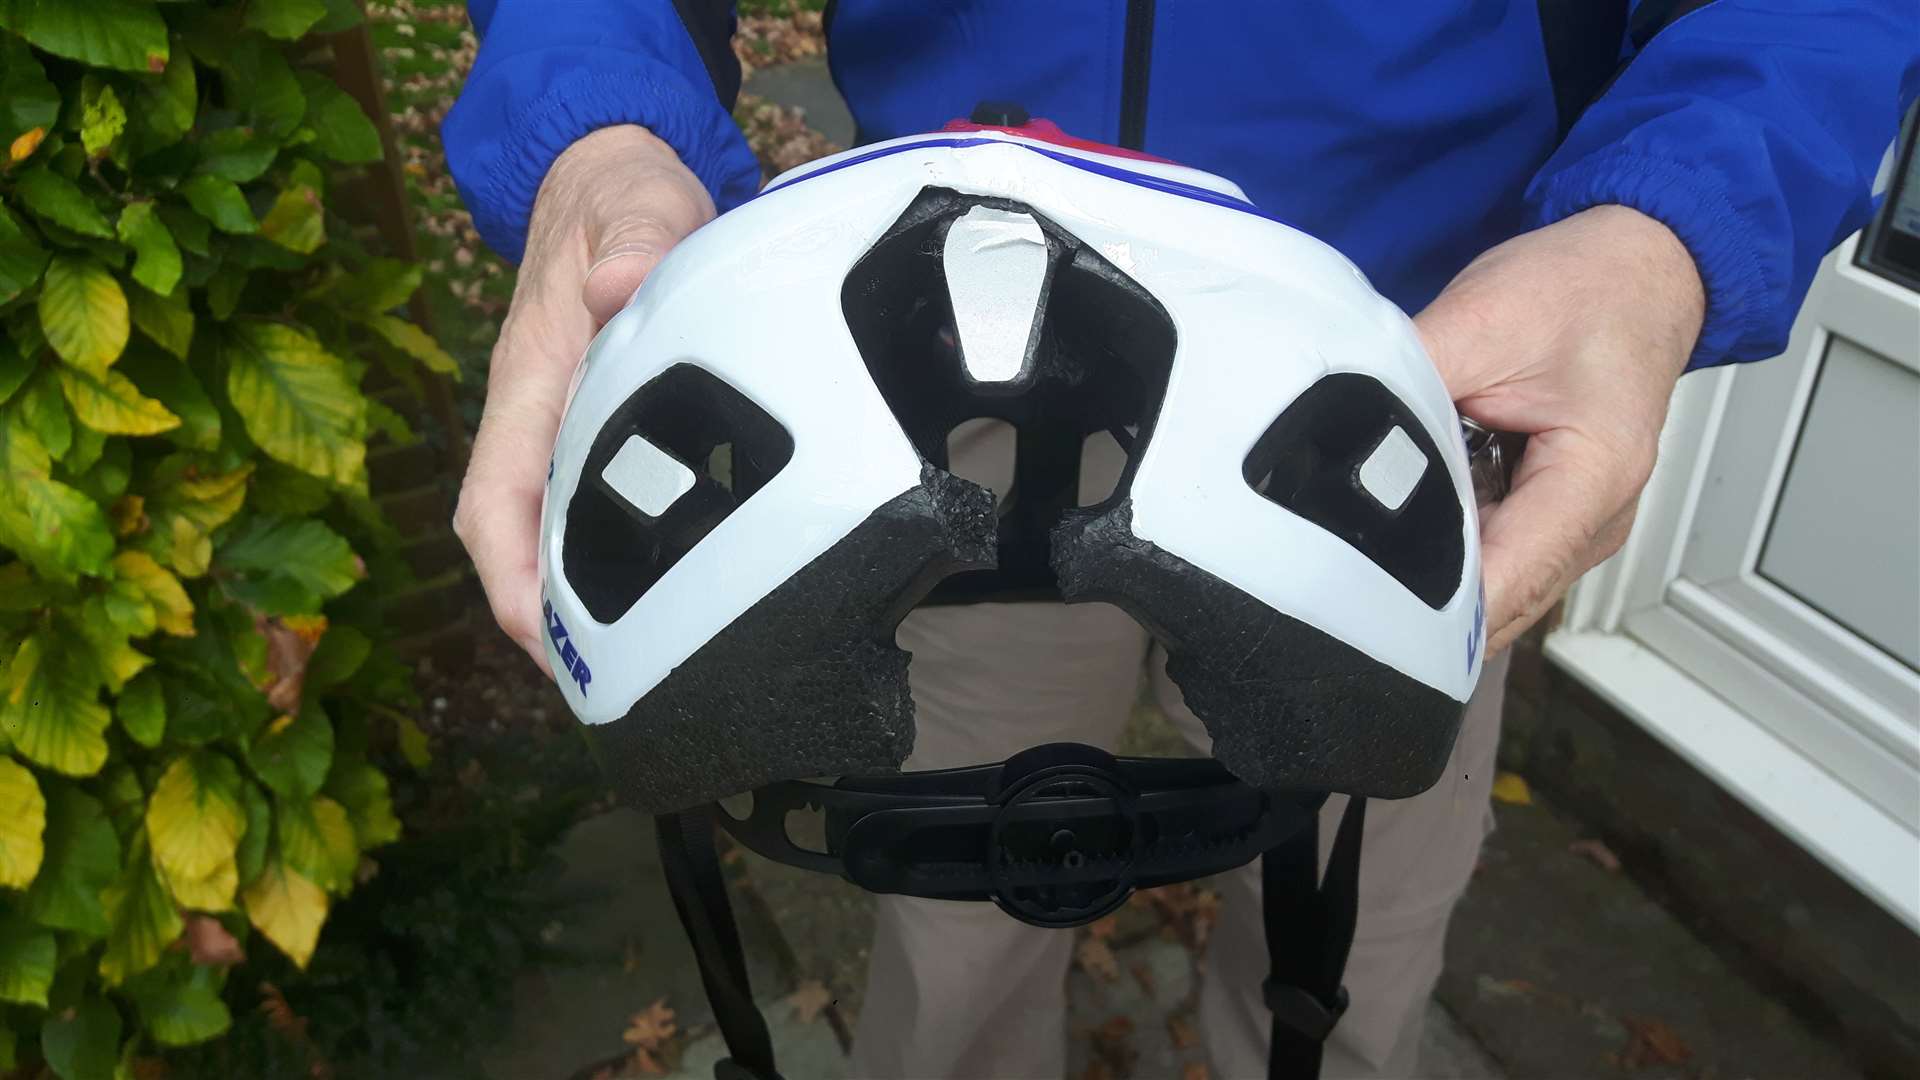 Ian Deal's helmet is split at the back